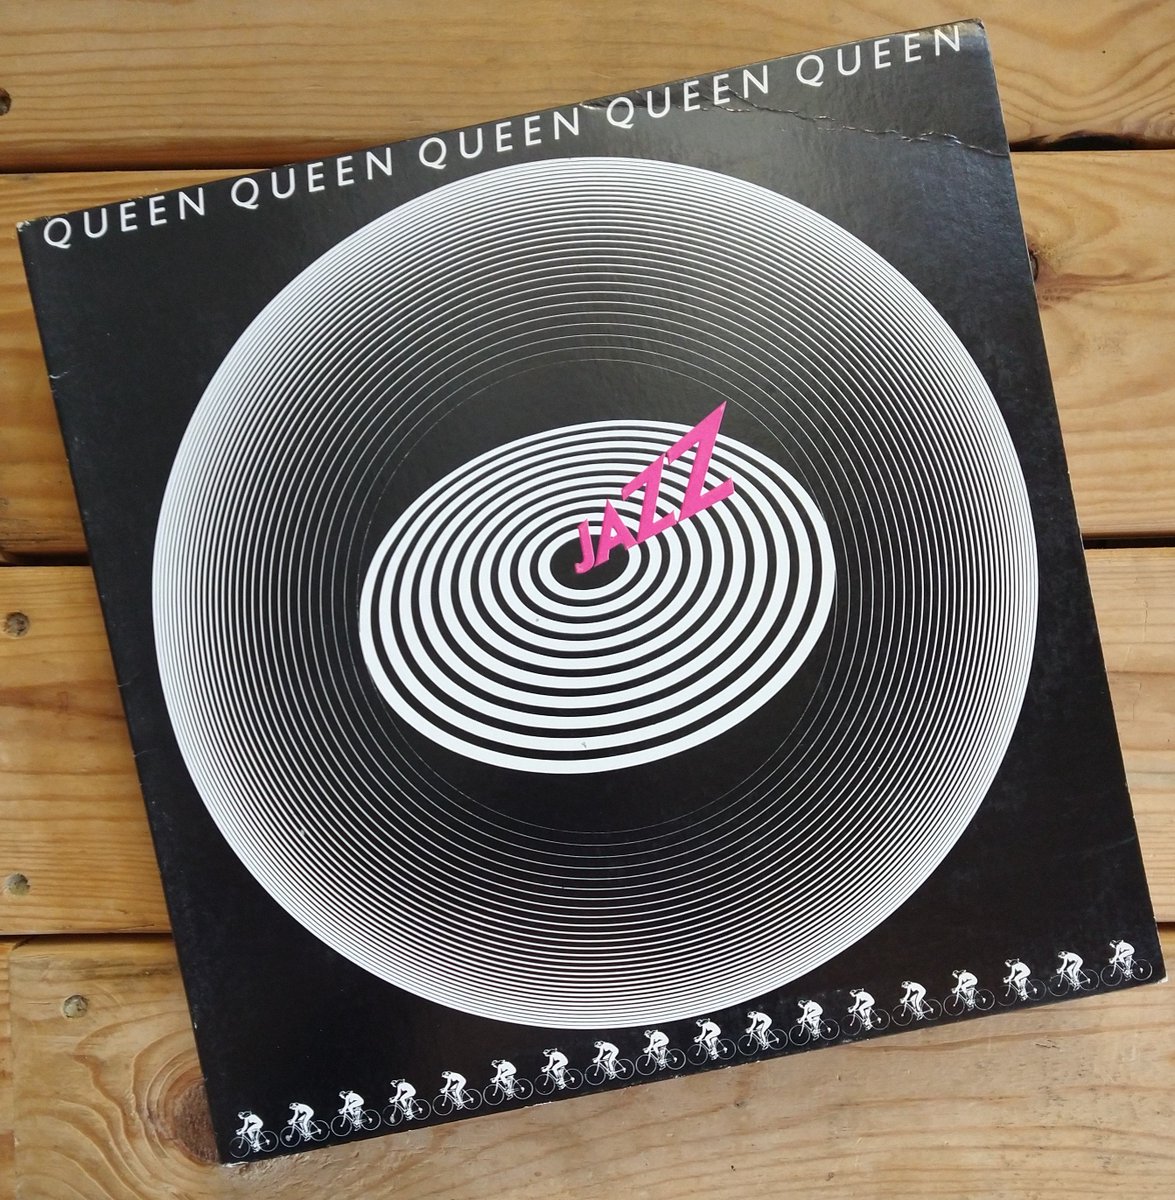 Morning Spin - #Queen #NowPlaying #vinylrecords #vinylcommunity